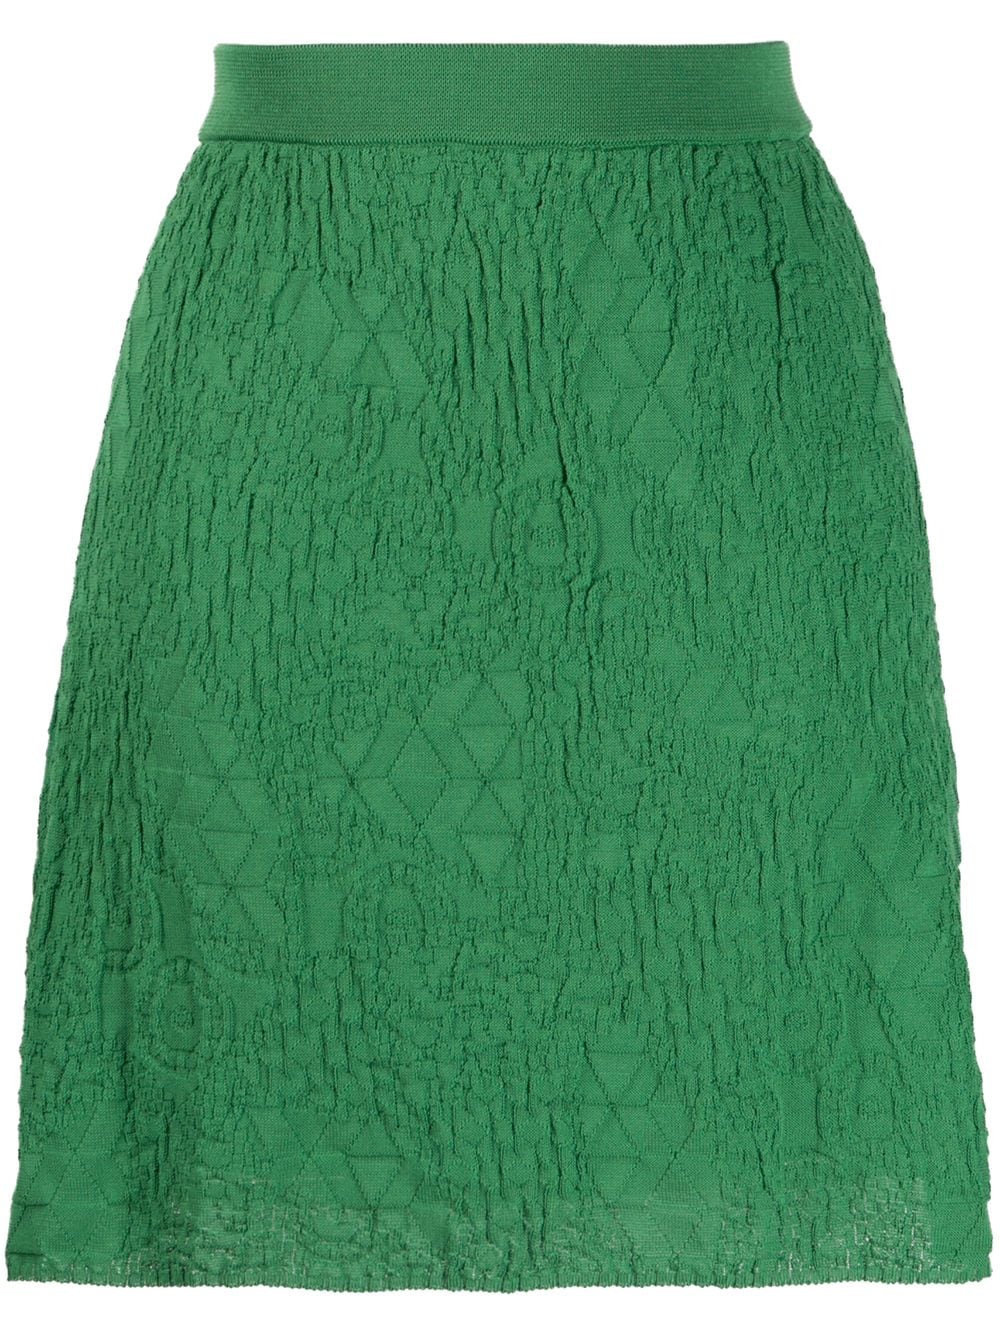 M Missoni Textured Knit Skirt In Green